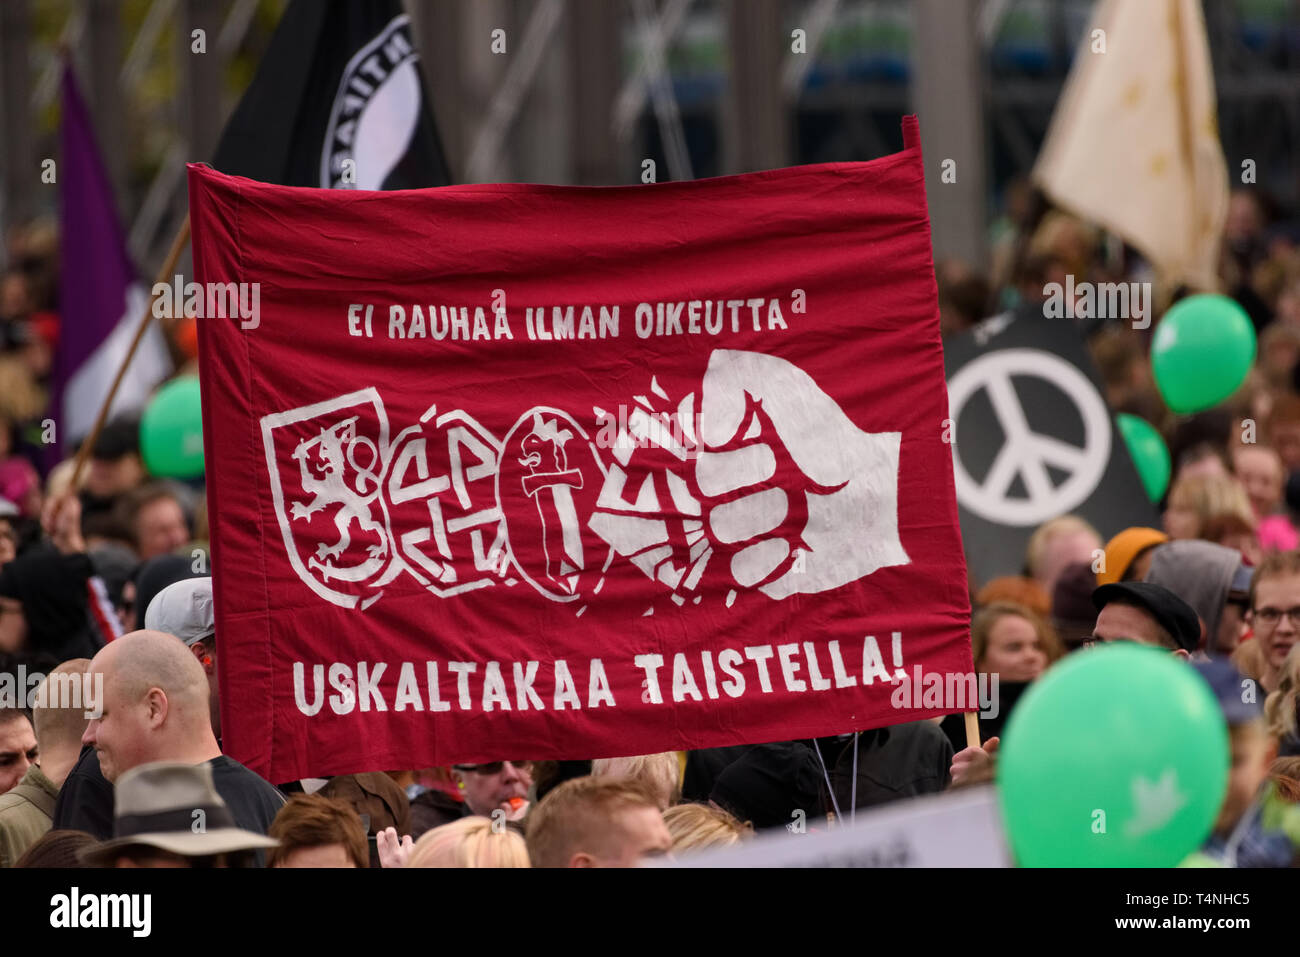 Helsinki, Finland - September 24, 2016: Peli poikki - Rikotaan hiljaisuus - protest rally against racism and right wing extremist violence in Helsinki Stock Photo